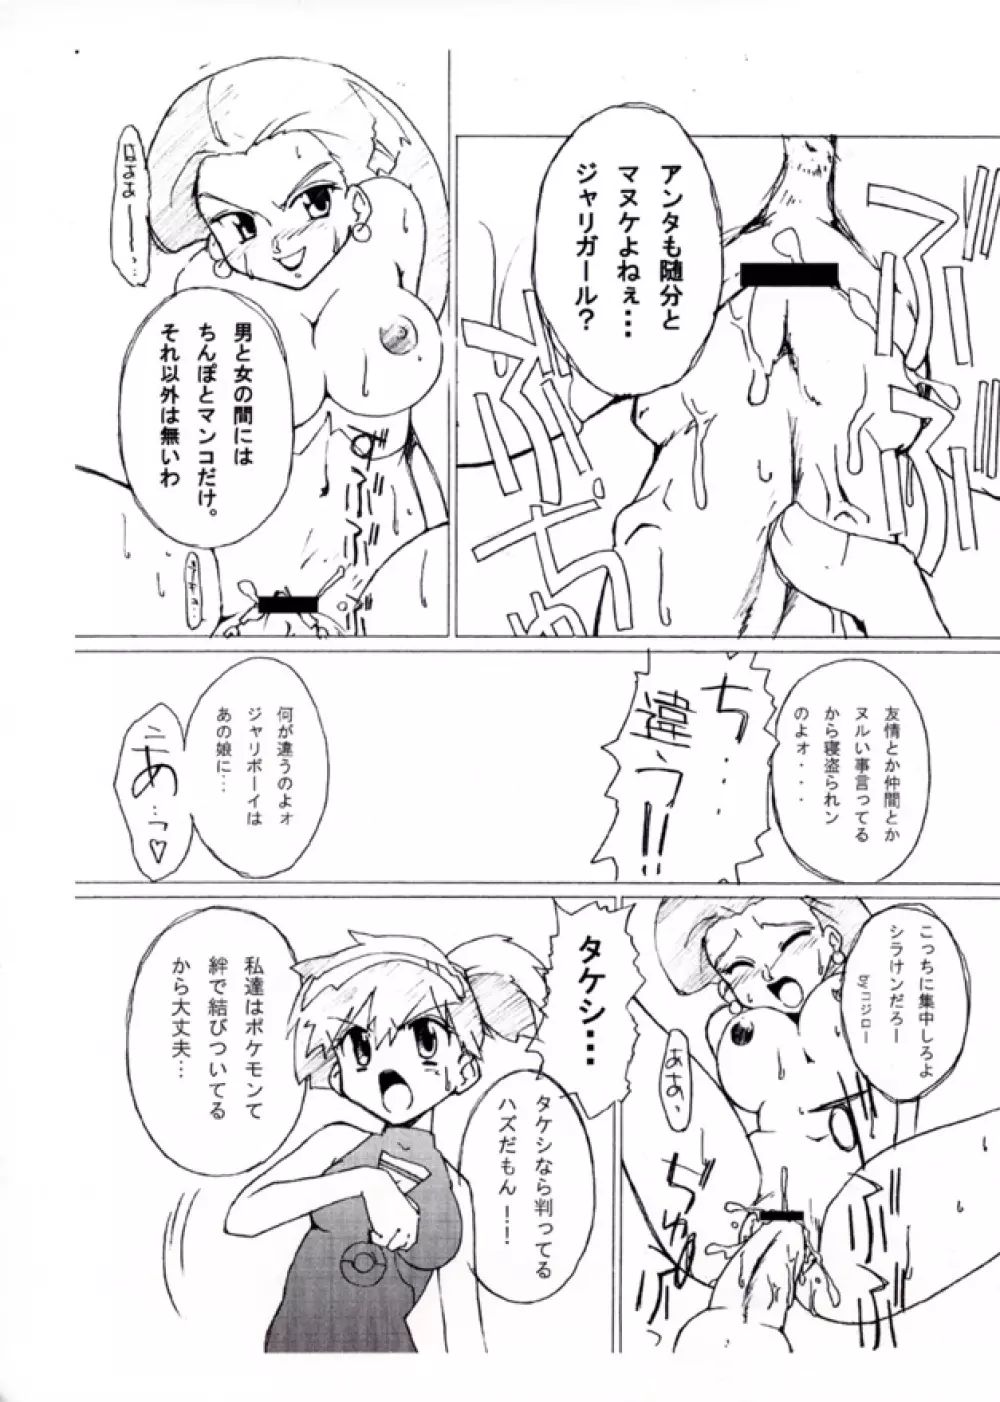 KASUMIX XPLOSION Kasumi Comic part5 - page30